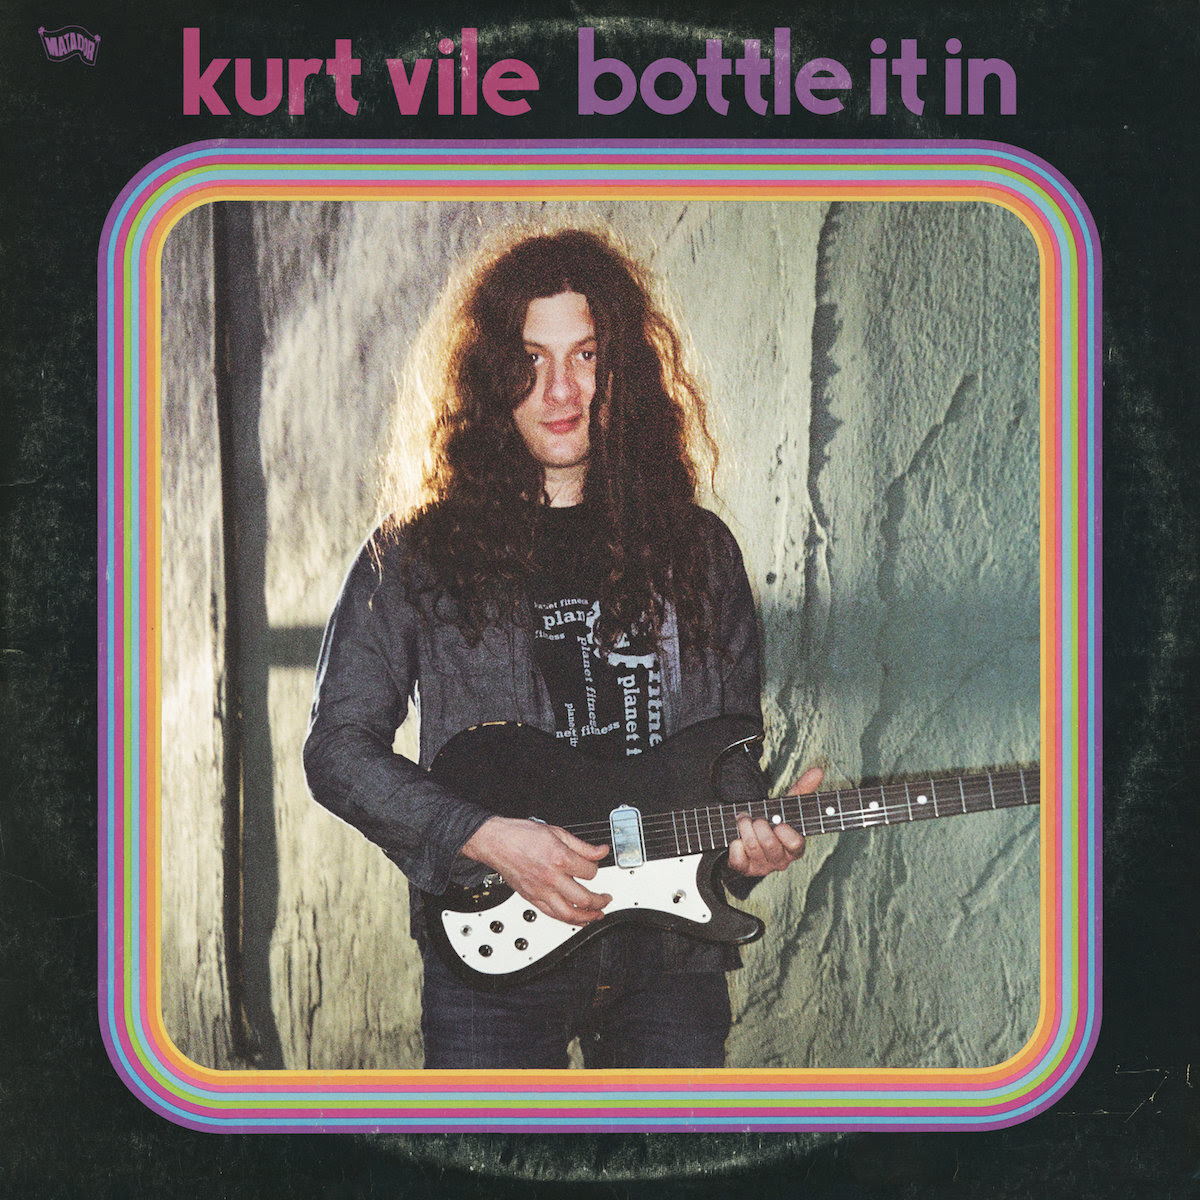 Kurt Vile announces new album 'Bottle It In' and shares new single 'Bassackwards'